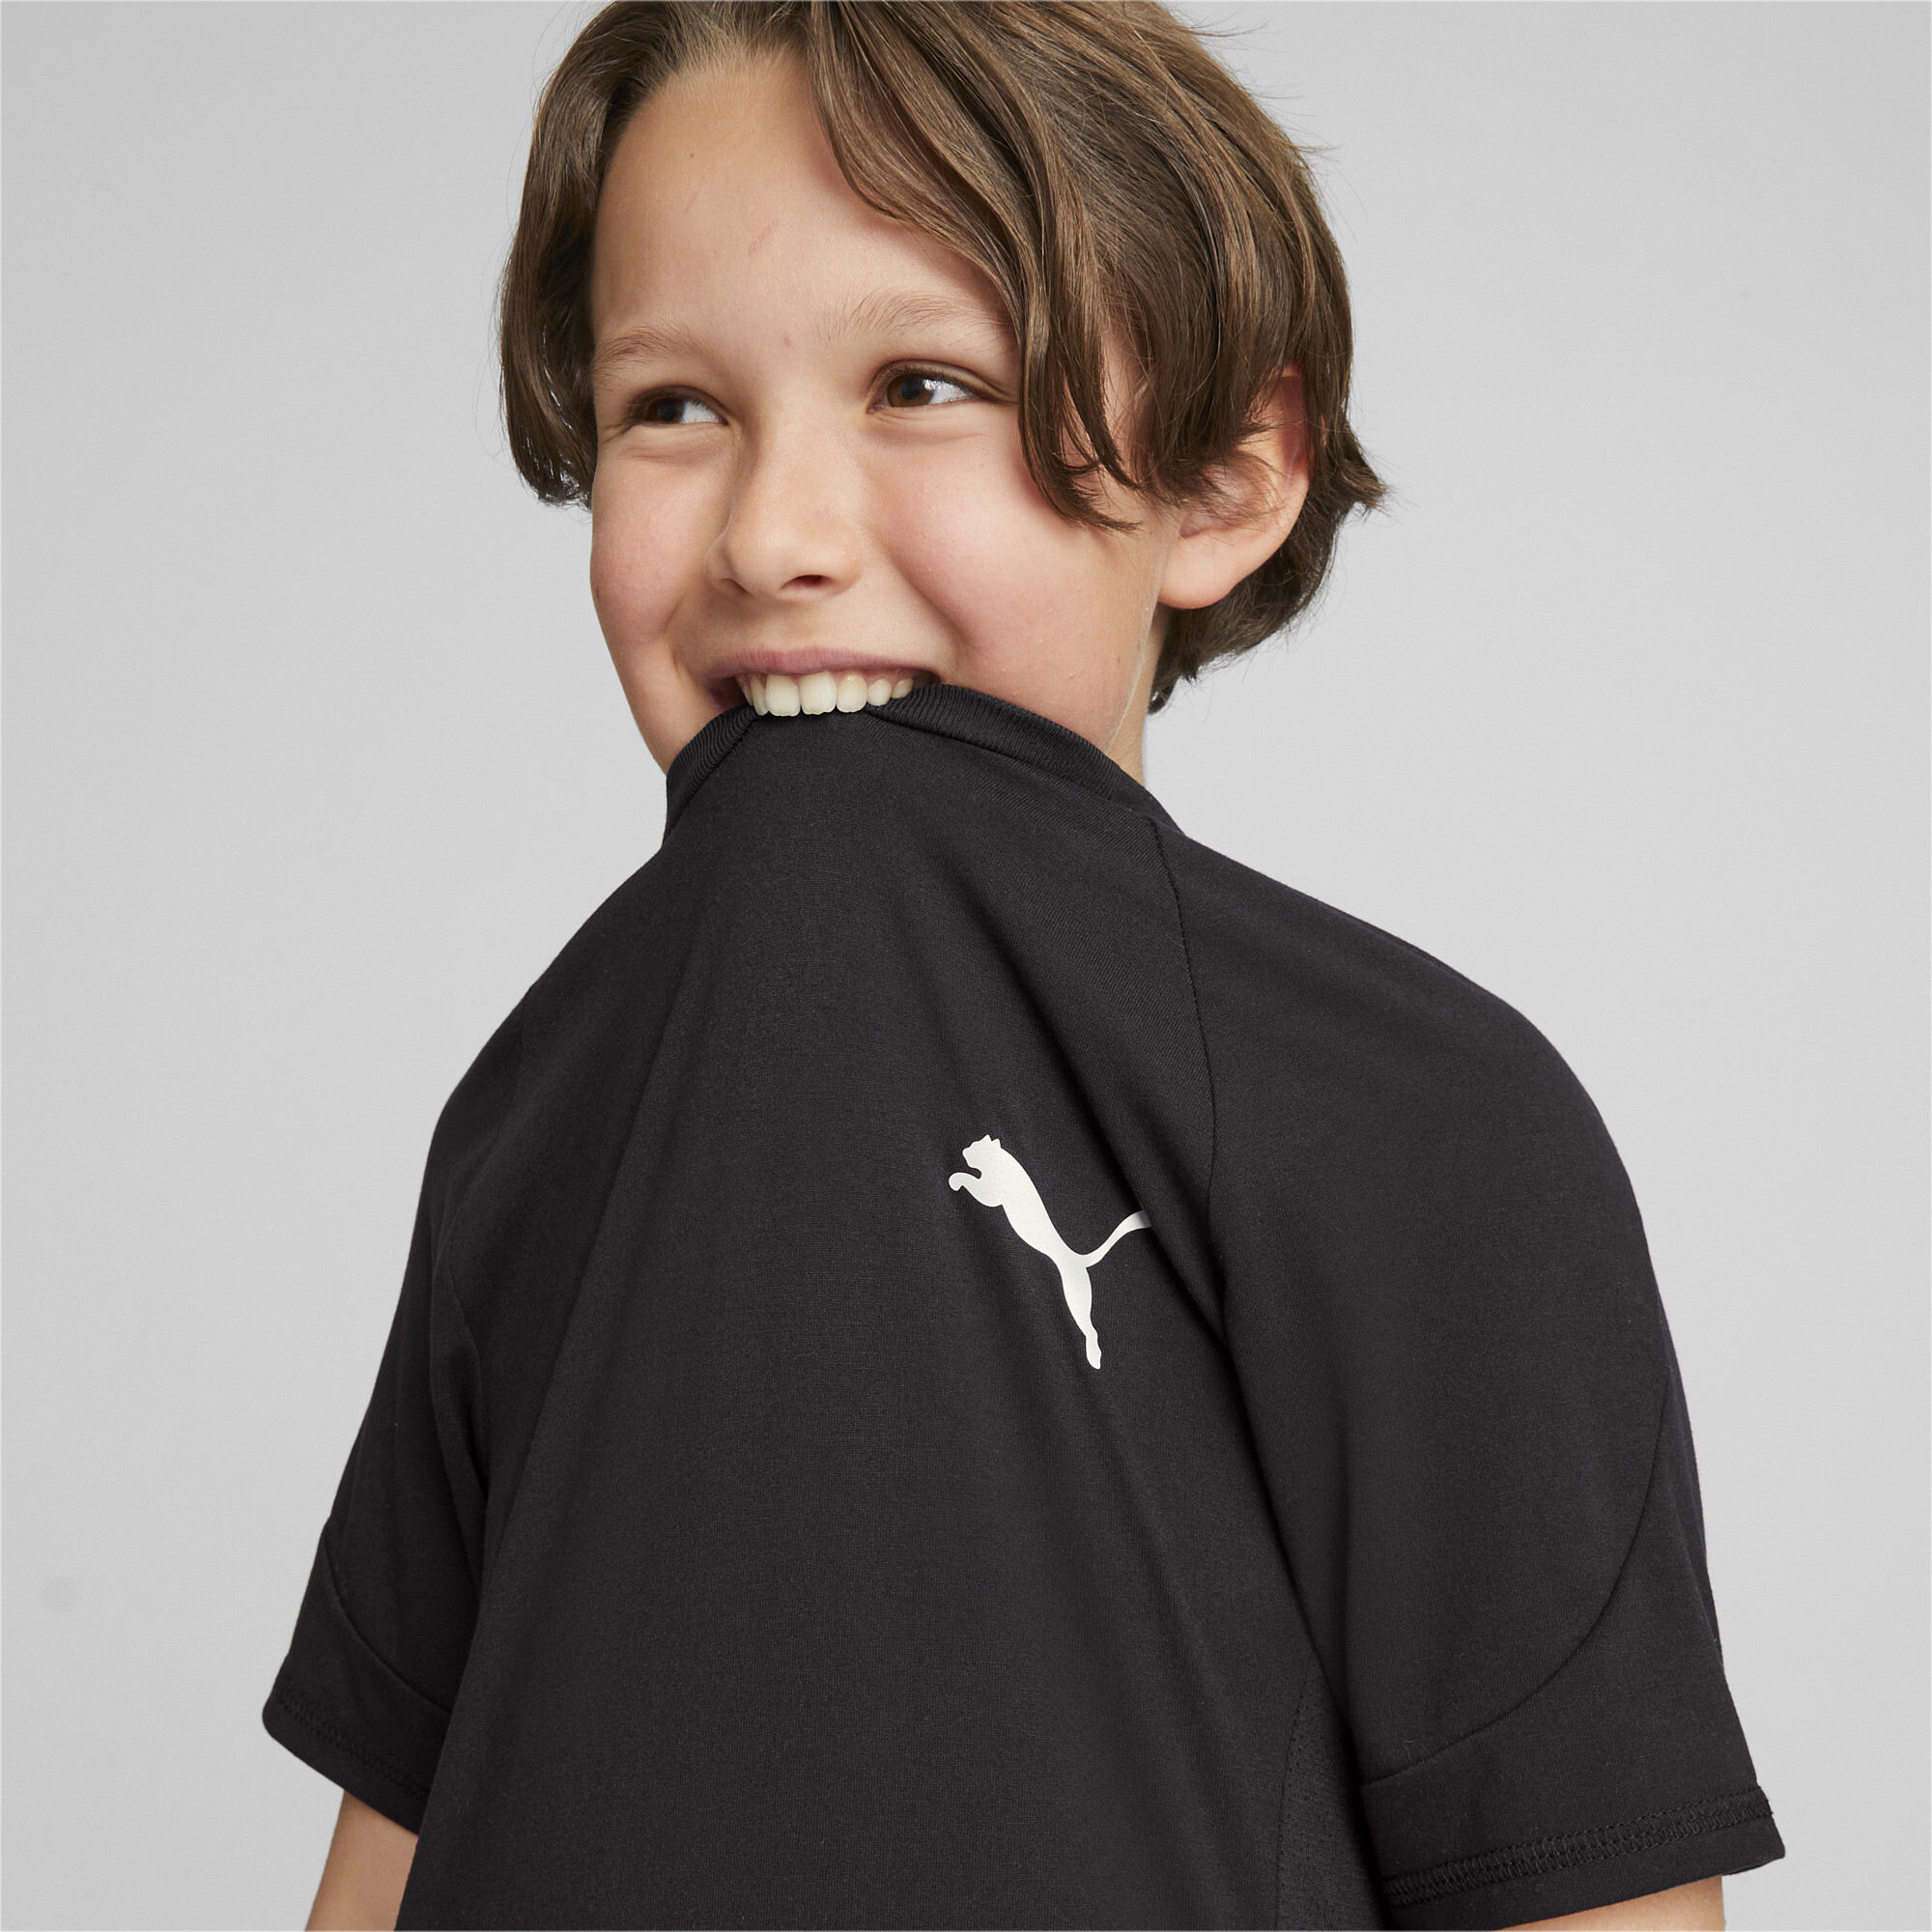 PUMA Evostripe T-Shirt In Black, Size 7-8 Youth